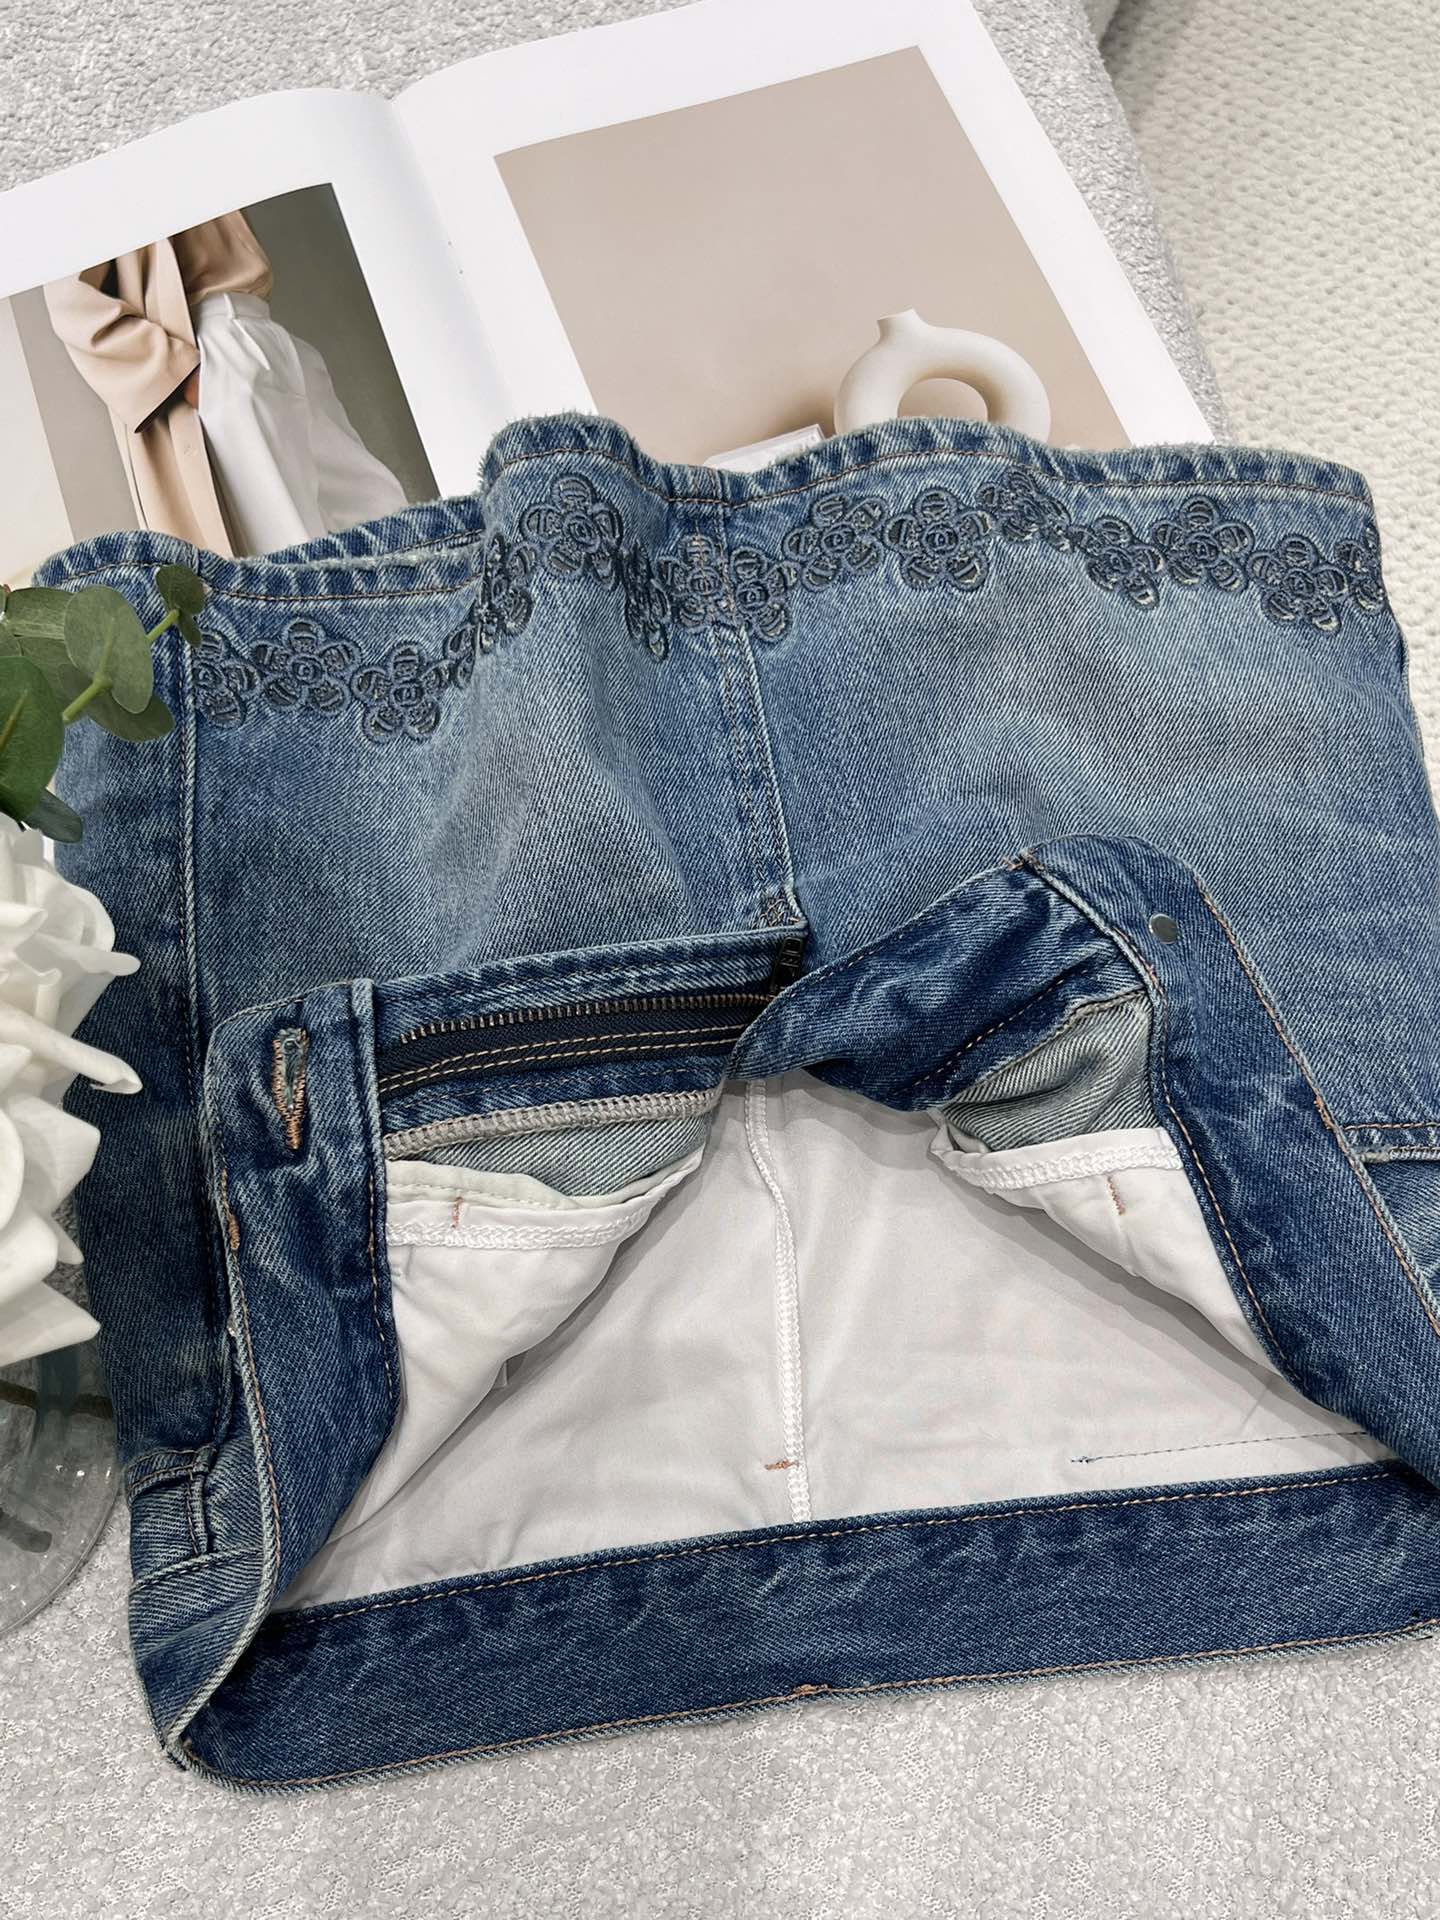 chanel ツイード スカート偽物 デニム 人気新作 半身 ファッション 品質保証 A形 美脚 レディース ブルー_6